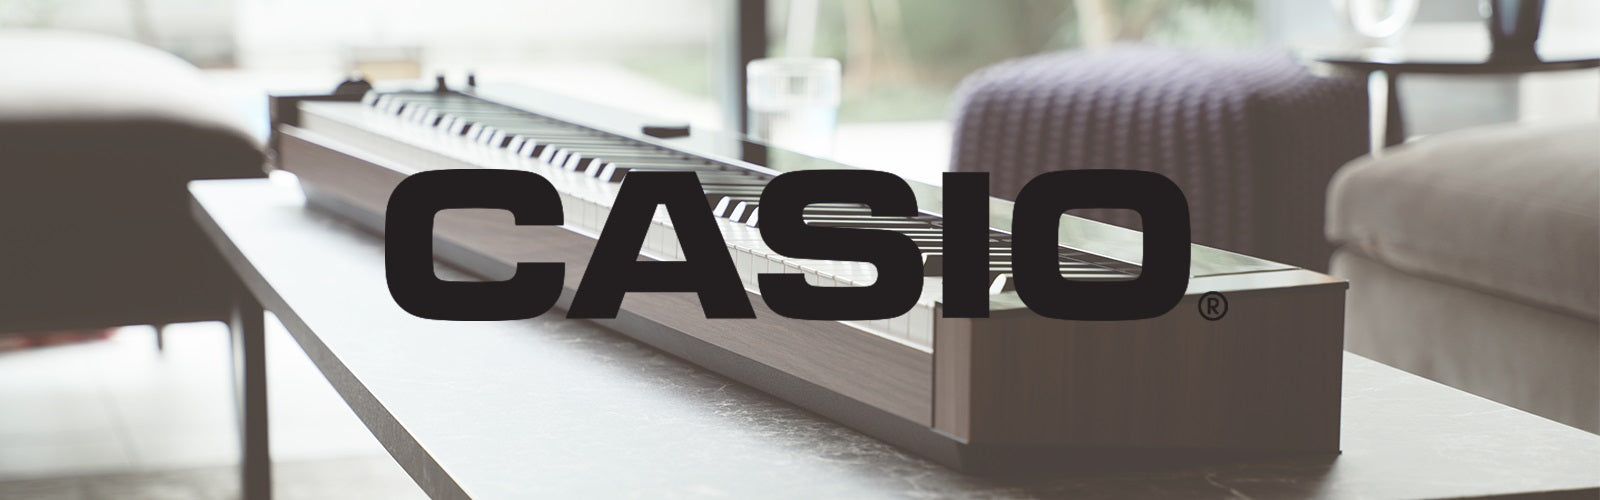 Casio Digital Piano